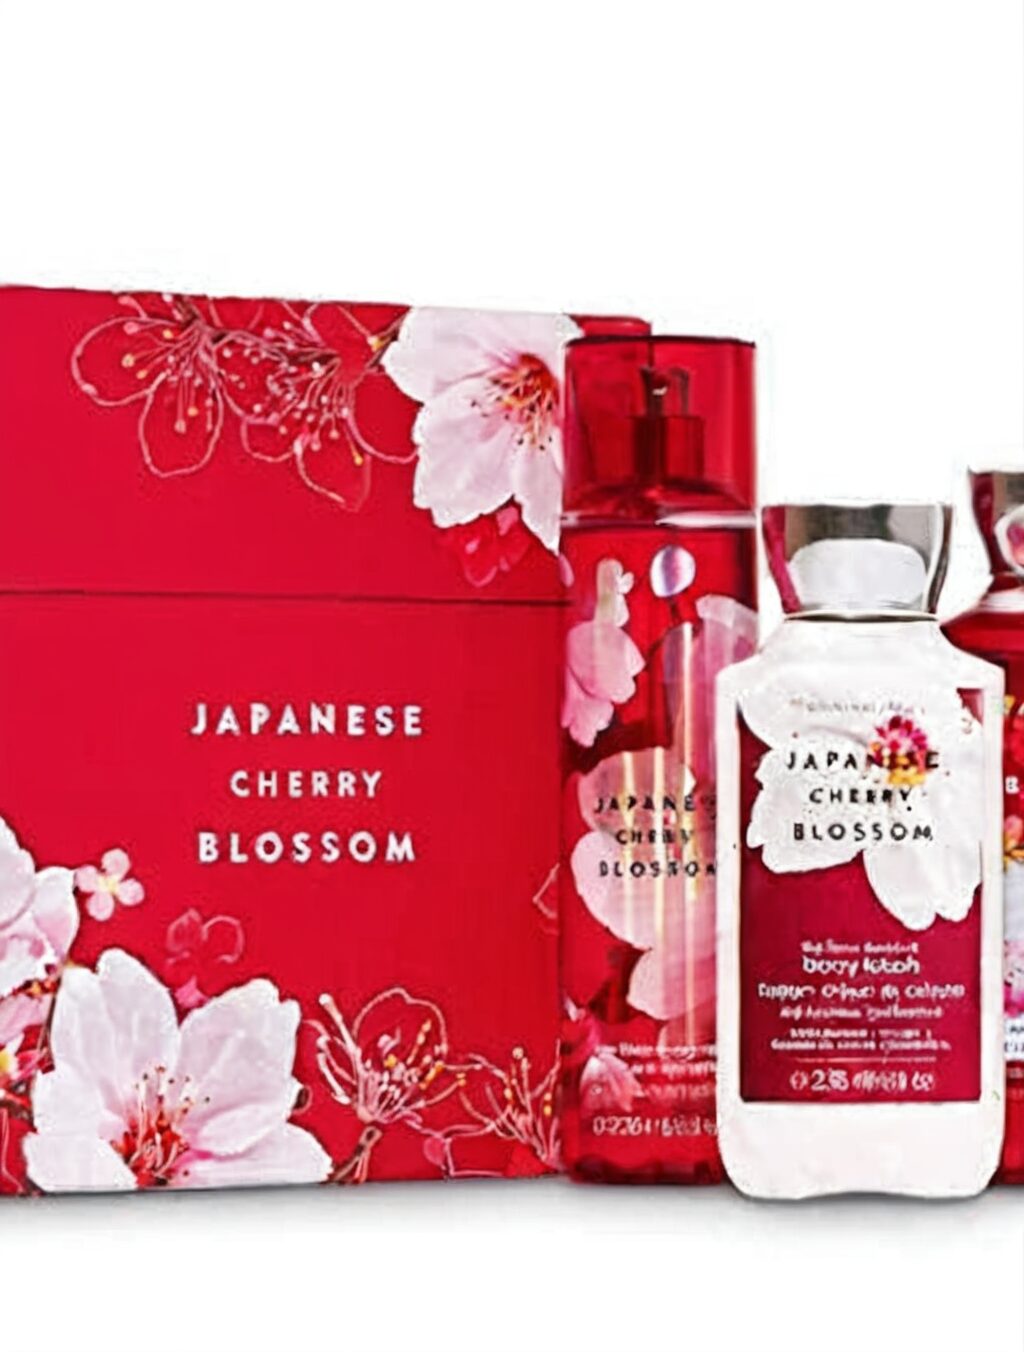 japanese cherry blossom gift to usa